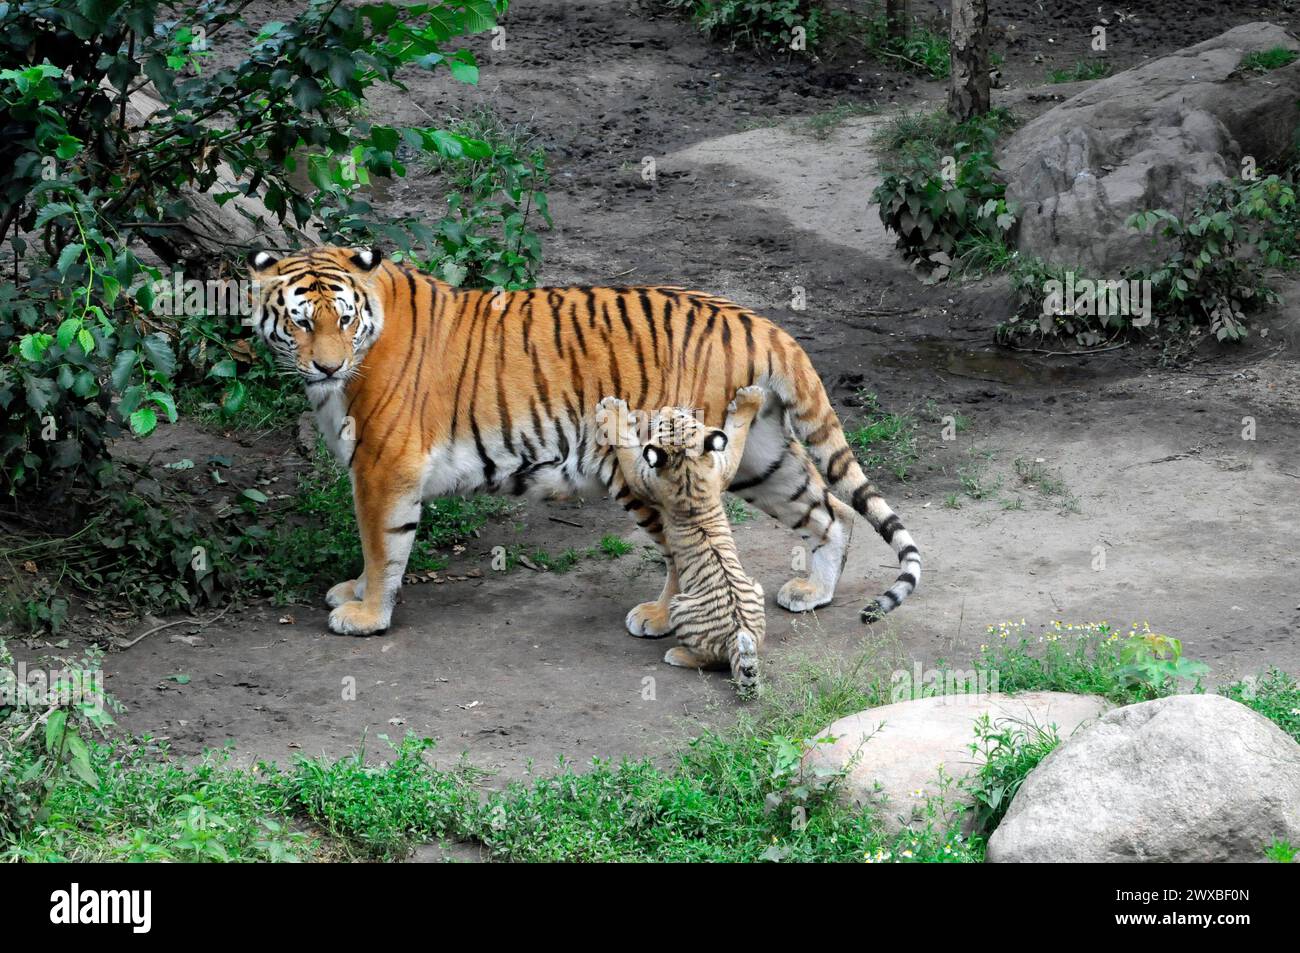 Sumatran tiger (Panthera tigris sumatrae), female with young, captive, A tiger young follows its mother through an enclosure with green plants Stock Photo